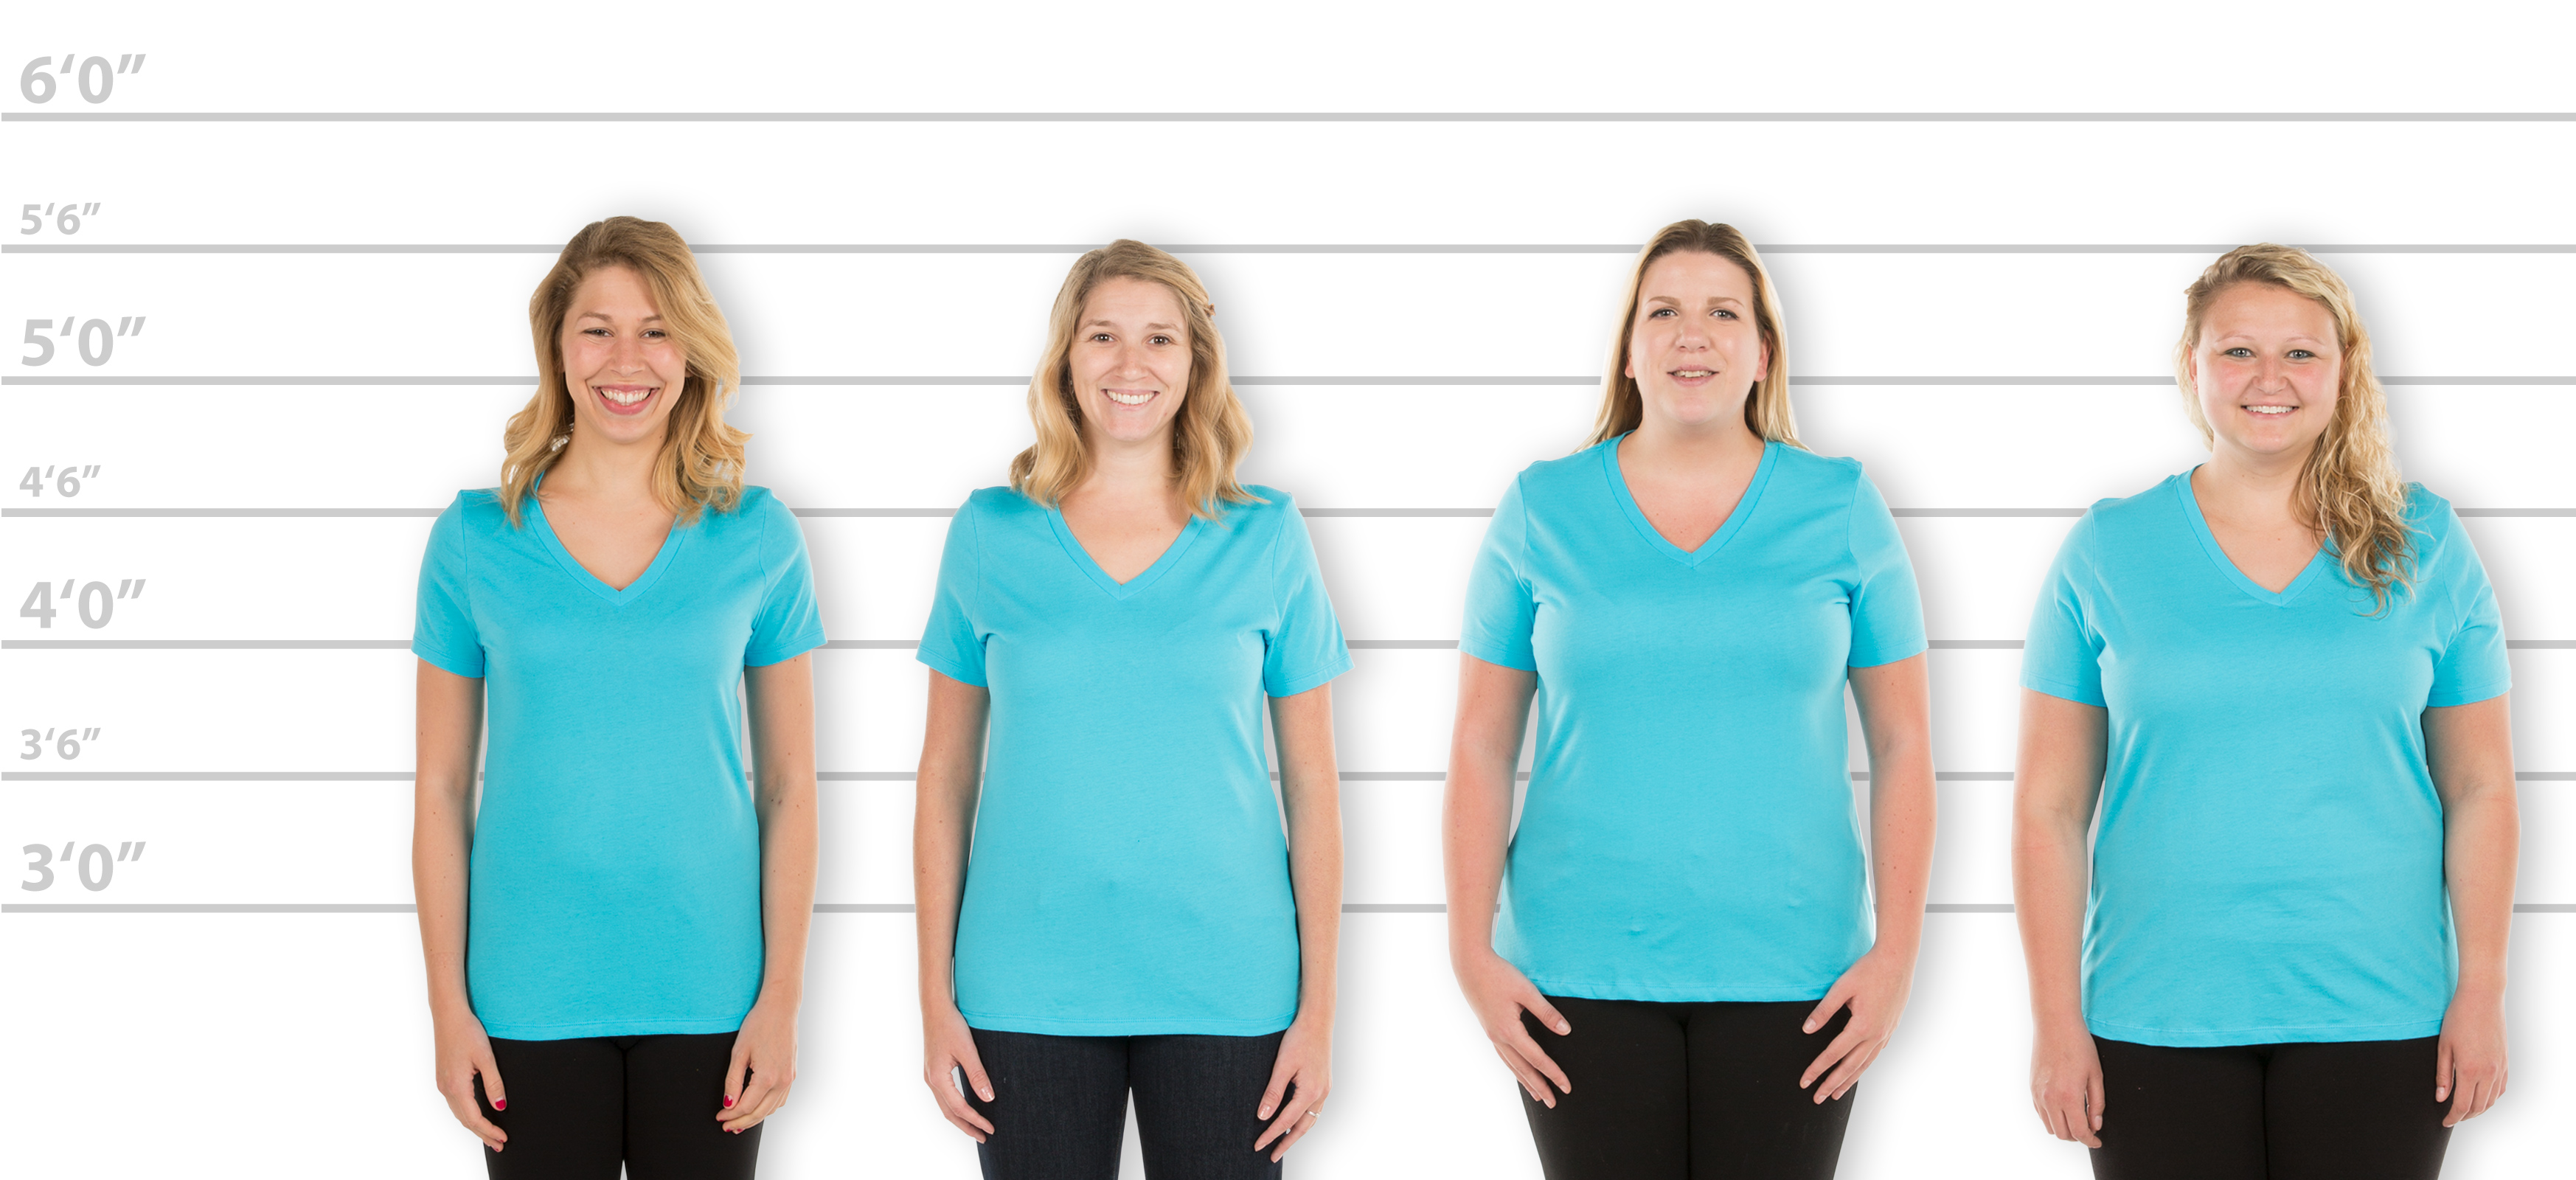 CustomInk.com Sizing Line-Up for Bella Women's V-Neck T-shirt - Standard  Sizes